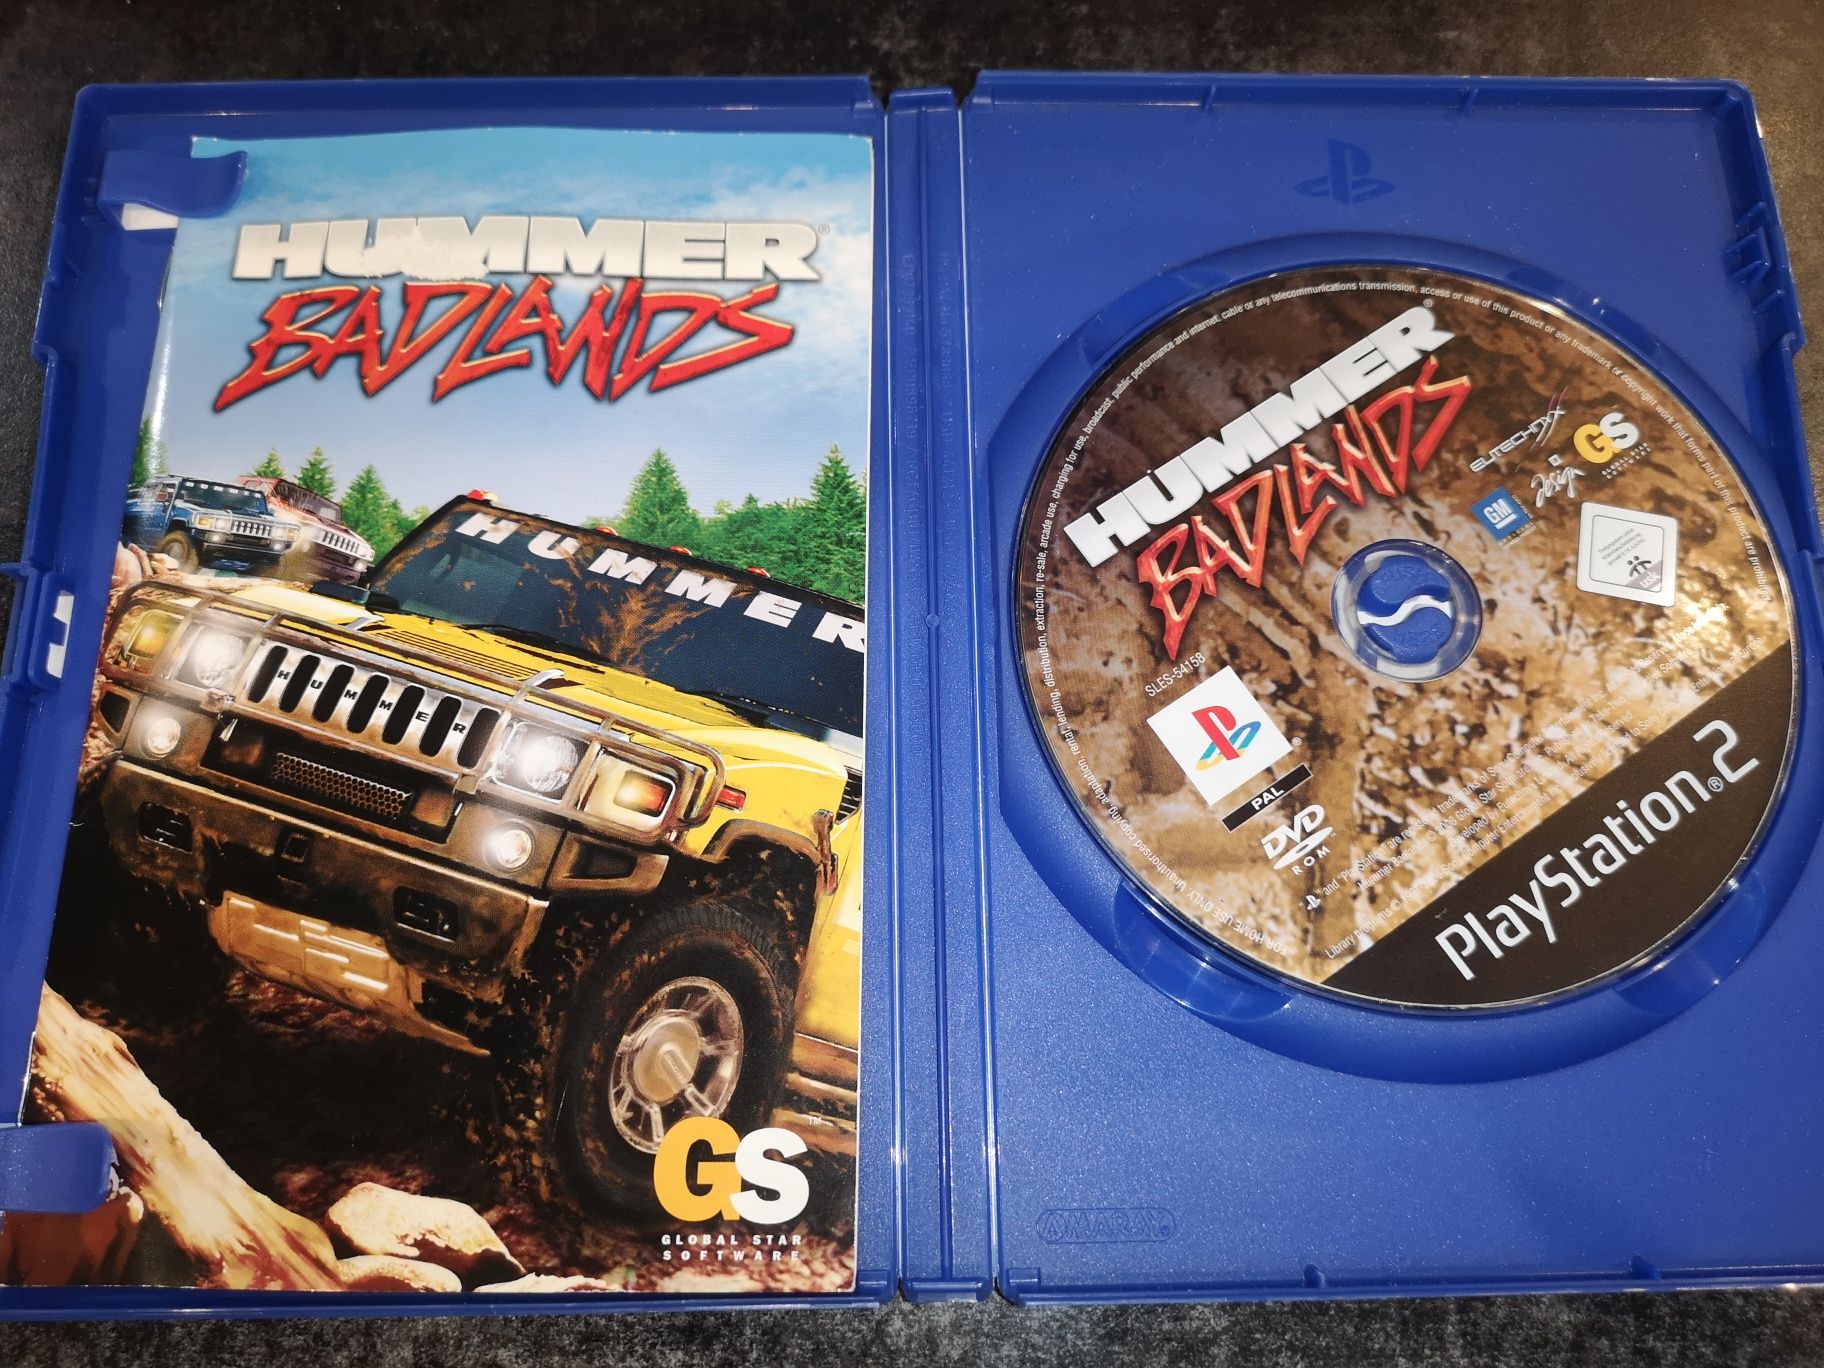 Hummer Badlands PS2 gra ANG (stan bdb) kioskzgrami Ursus